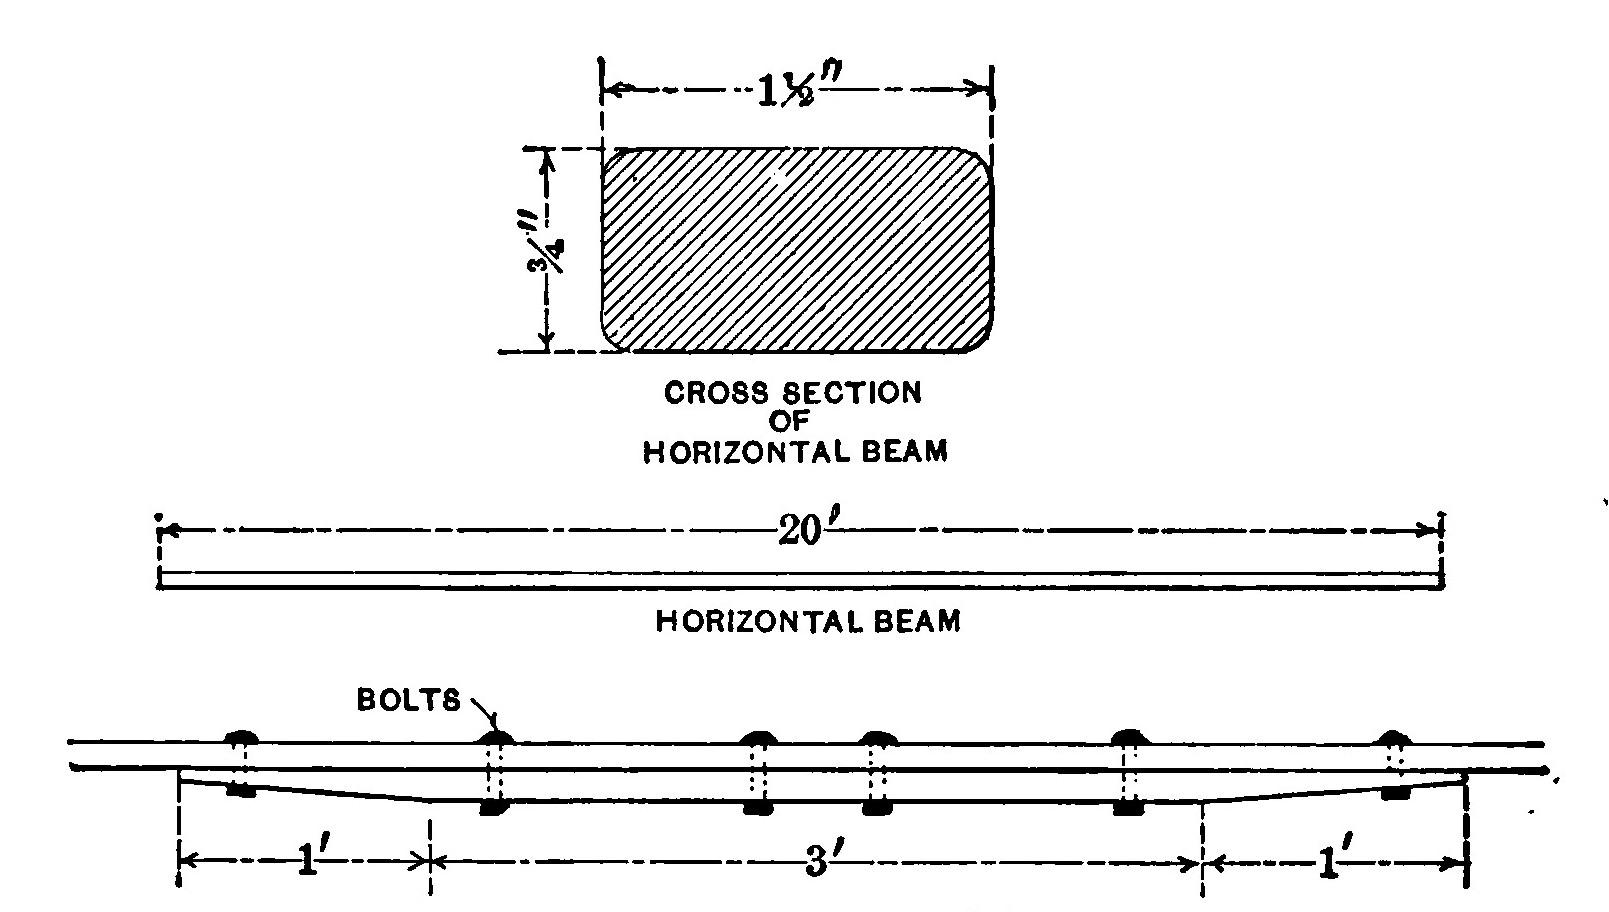 Fig. 1 Horizontal Beam